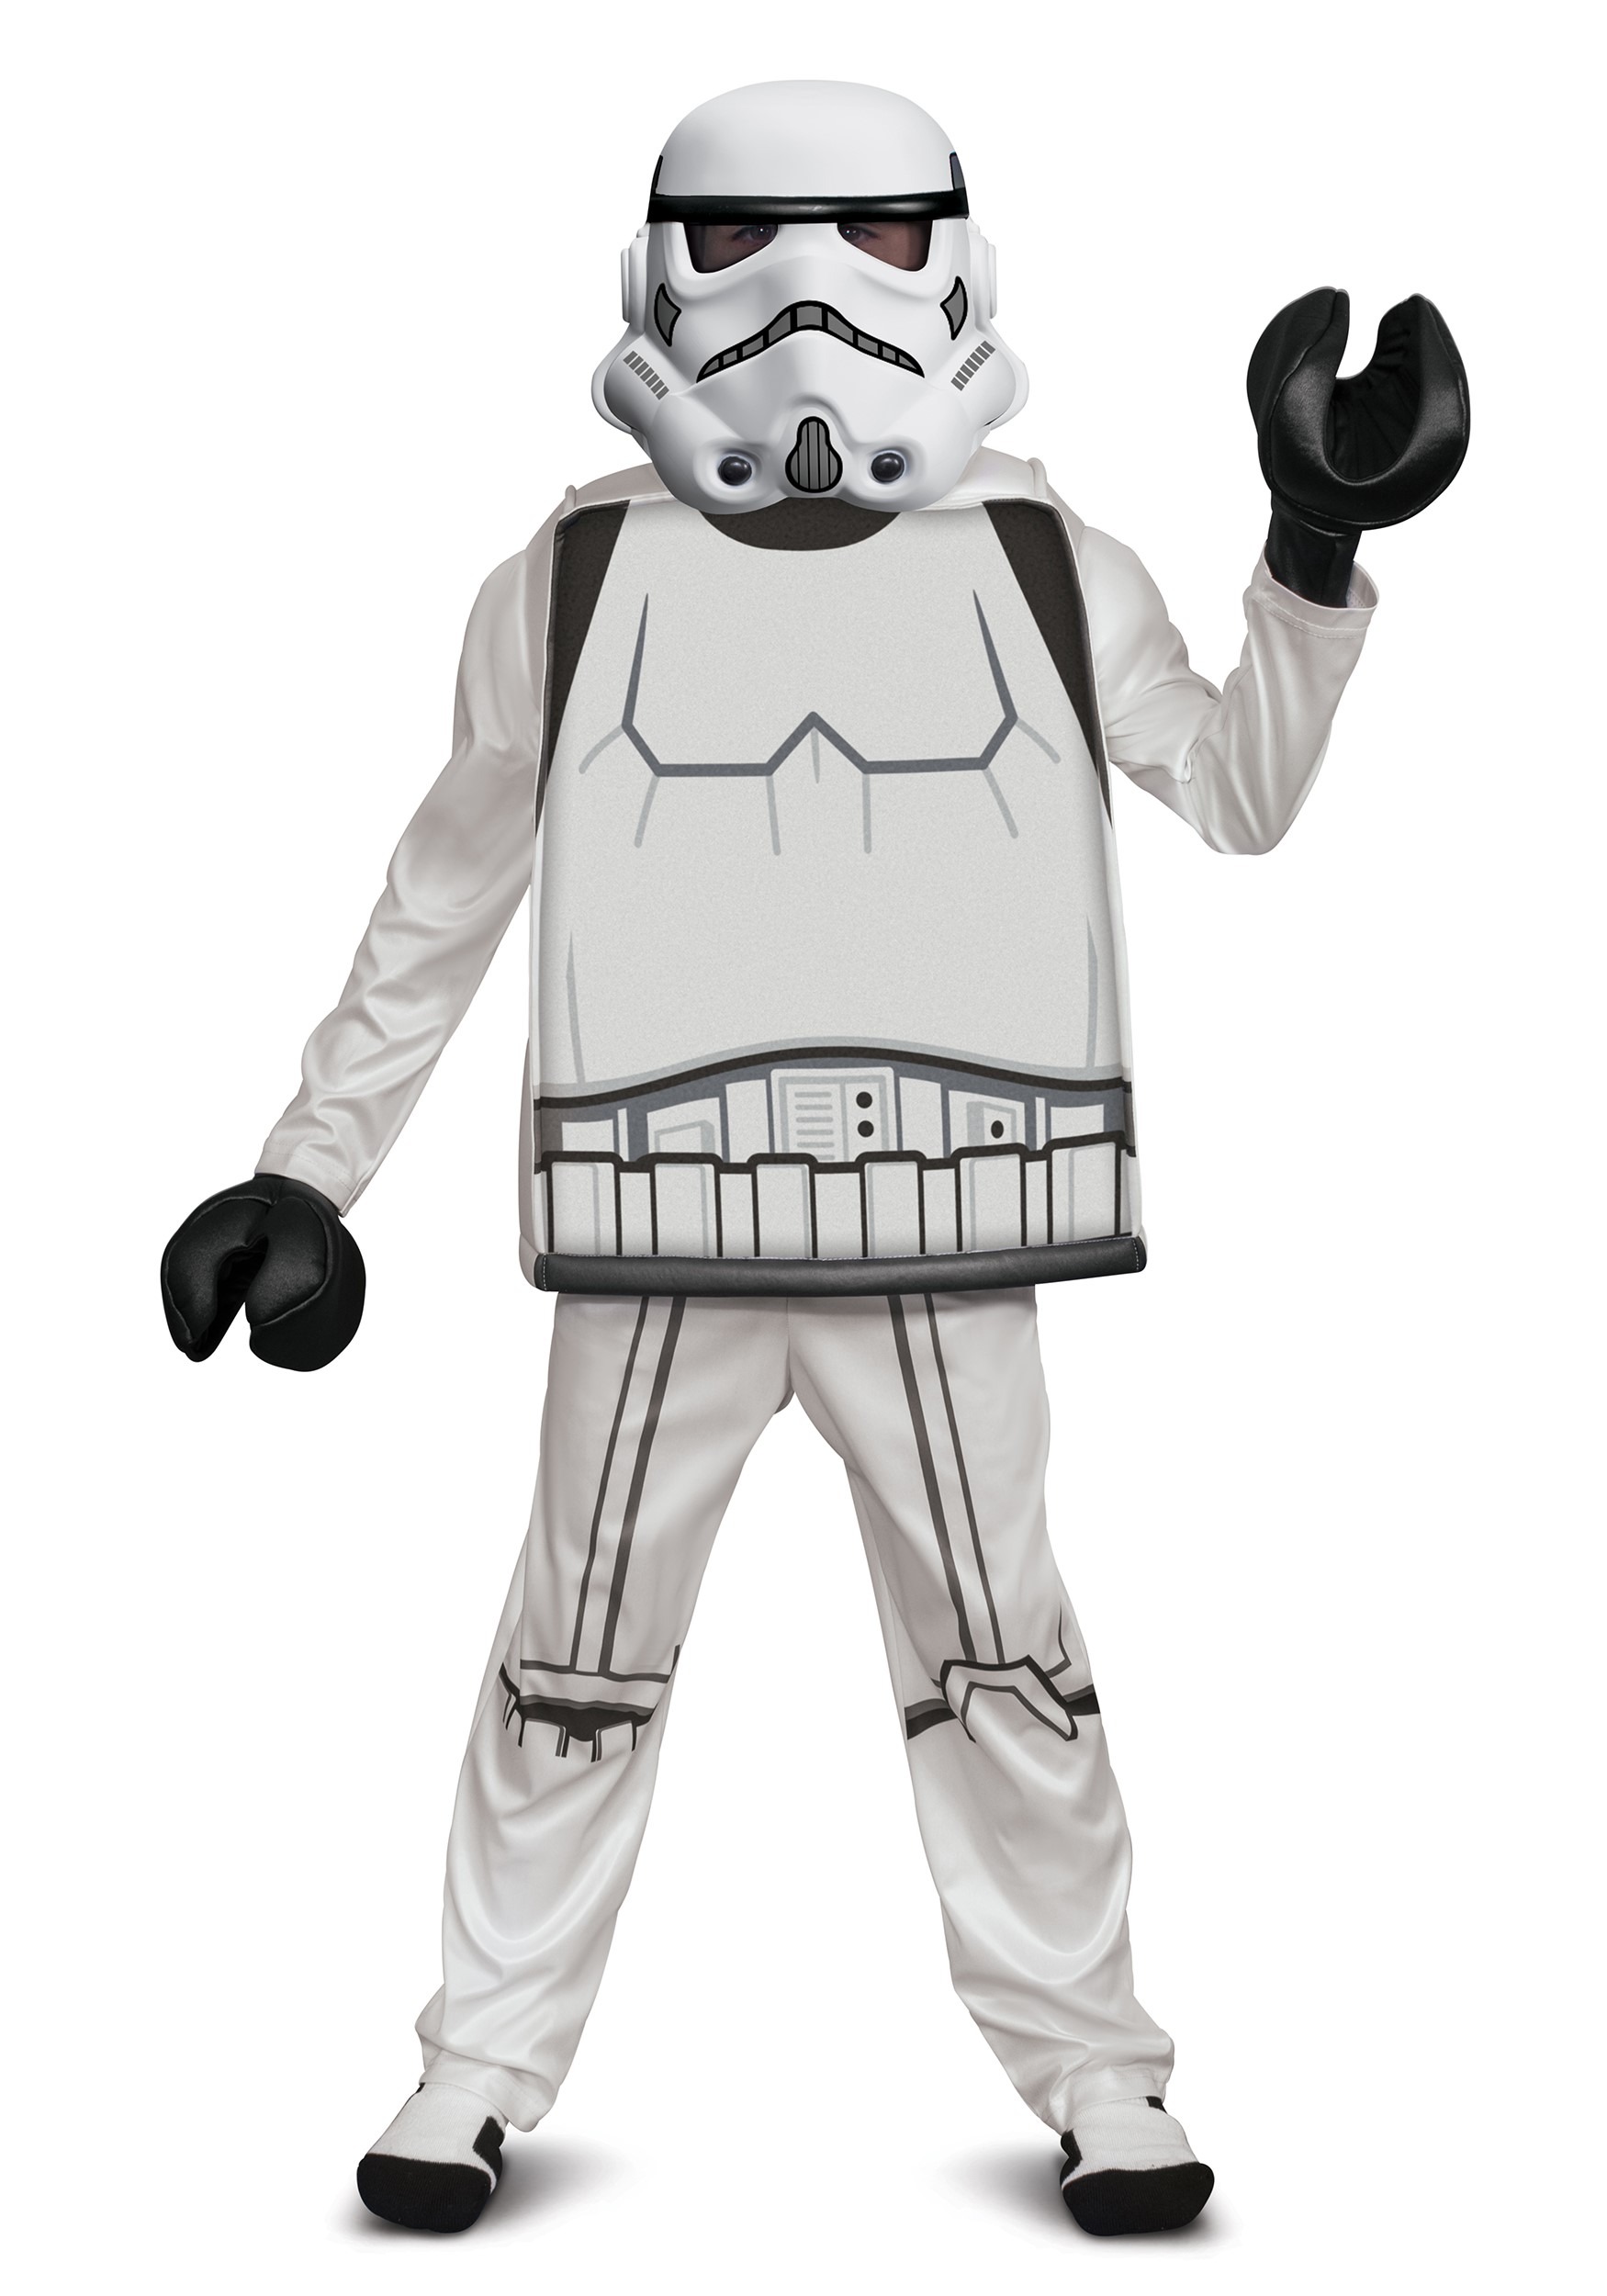 Boy’s Lego Star Wars Deluxe Lego Stormtrooper Costume